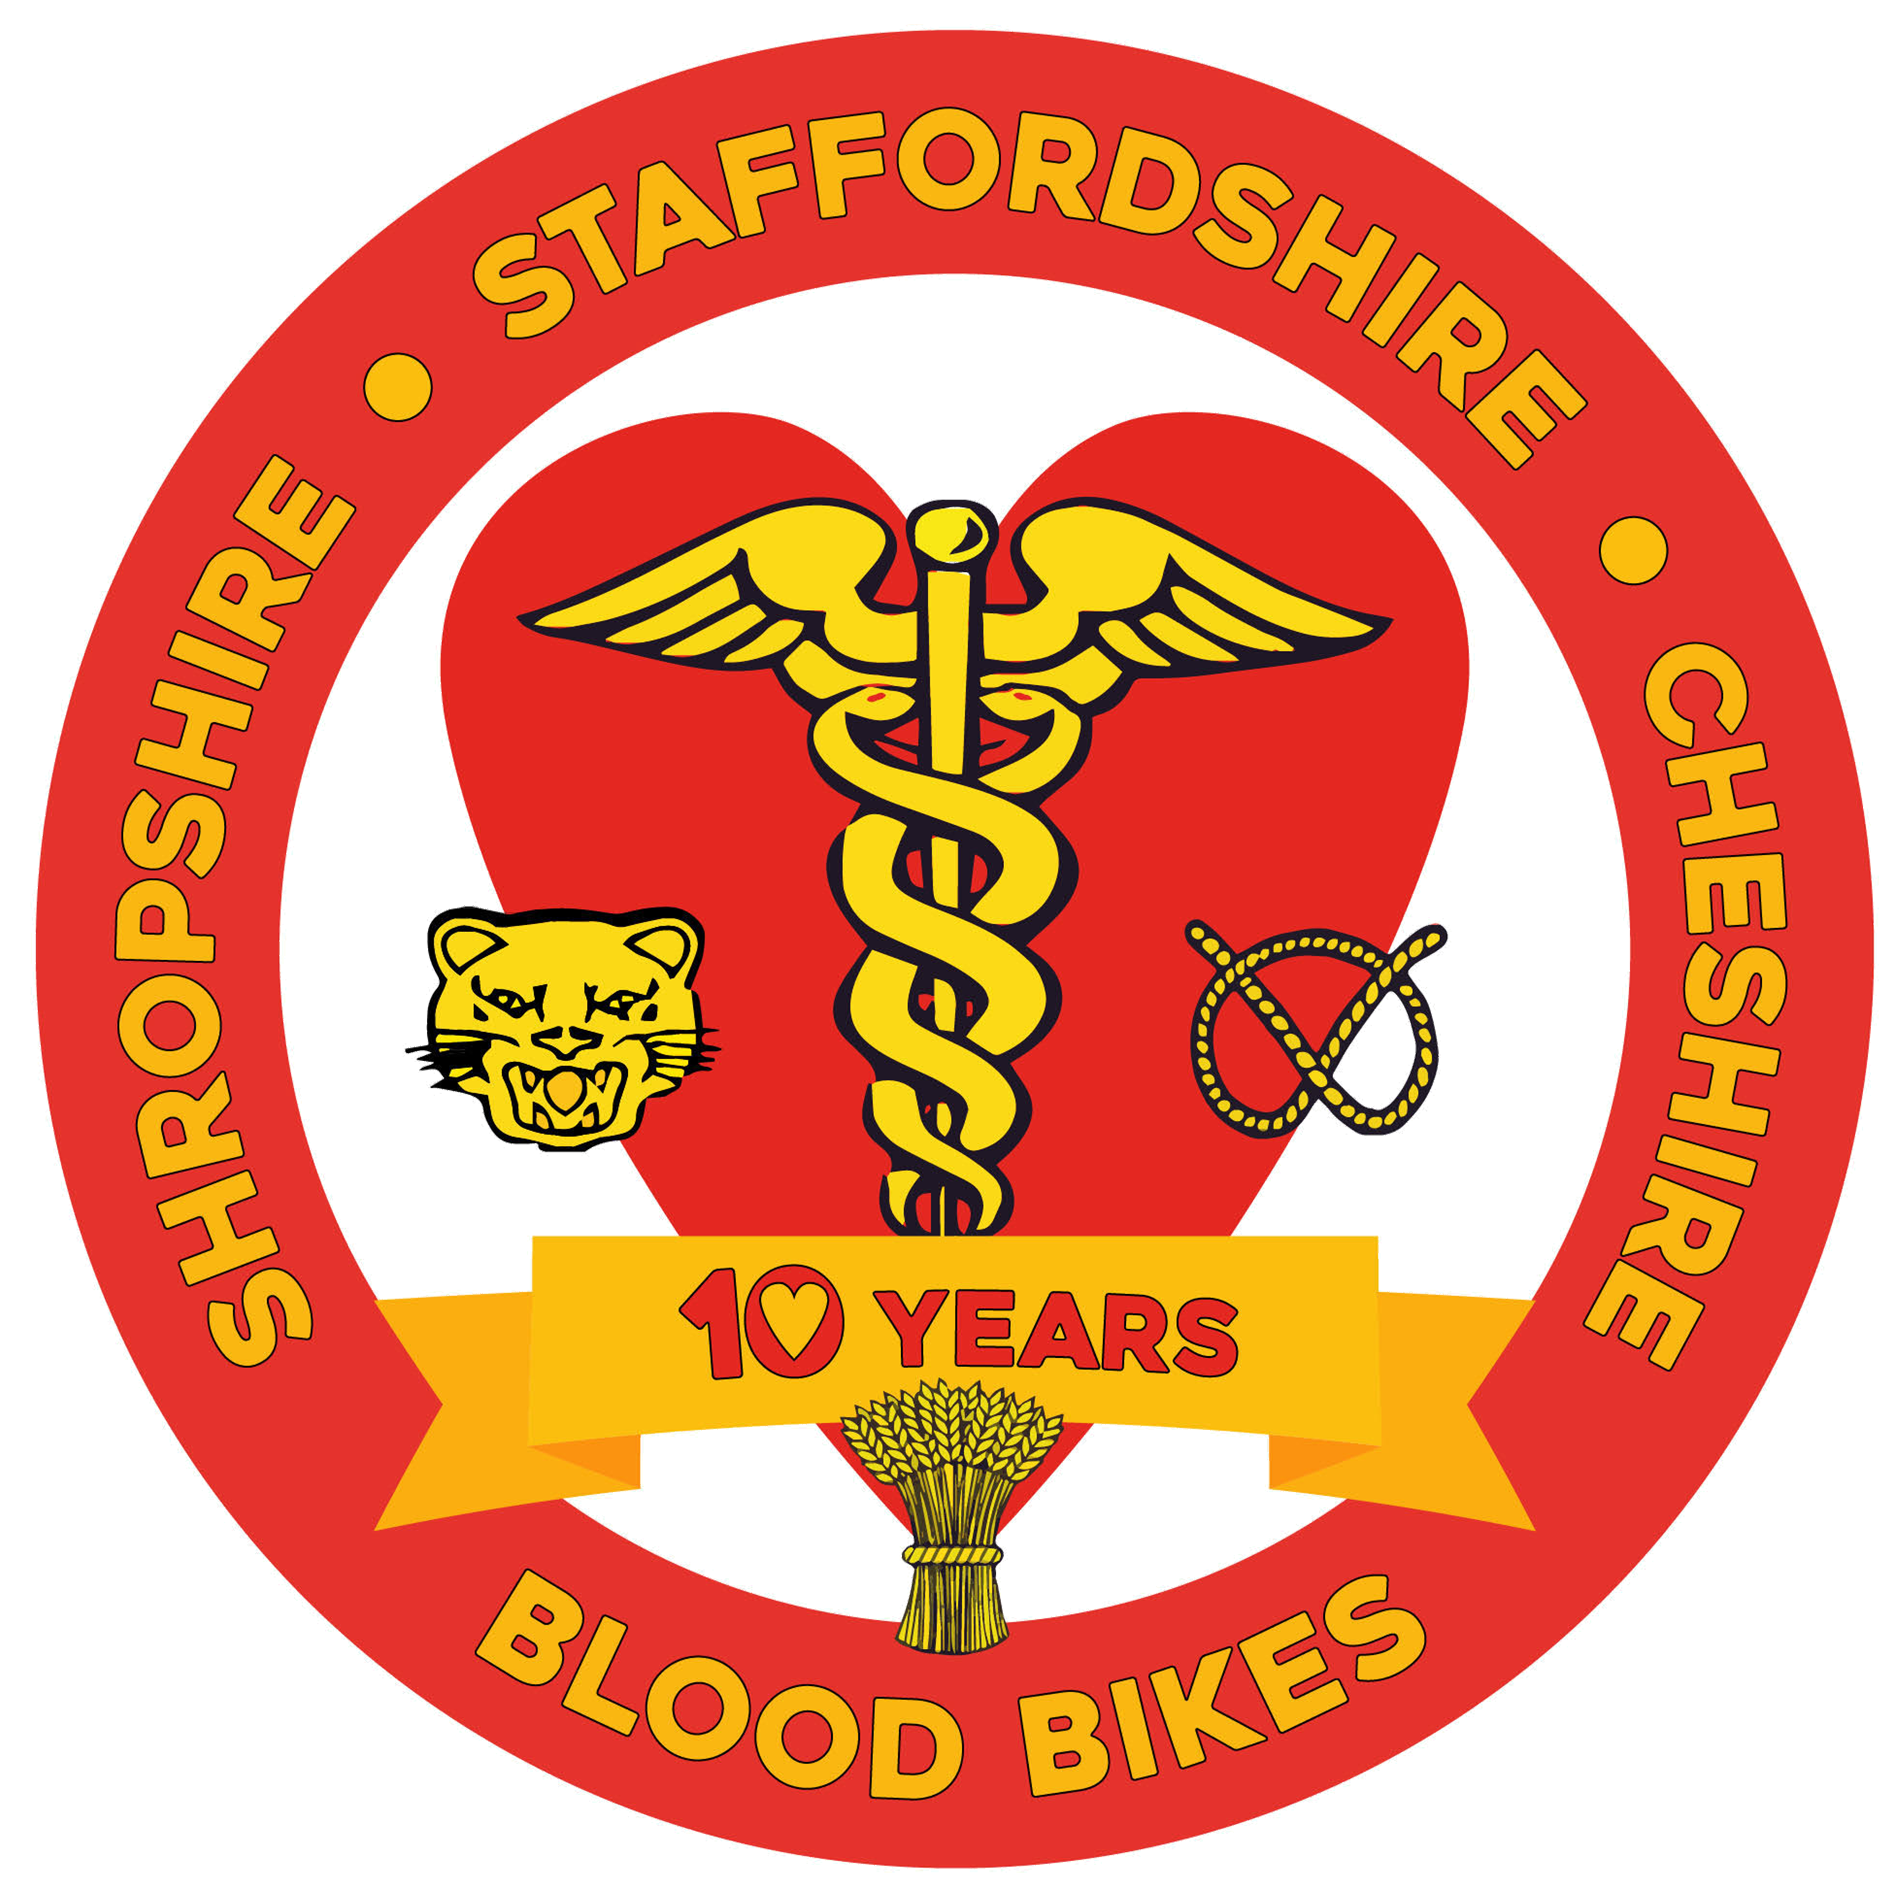 Shropshire, Staffordshire and Cheshire Blood Bikes